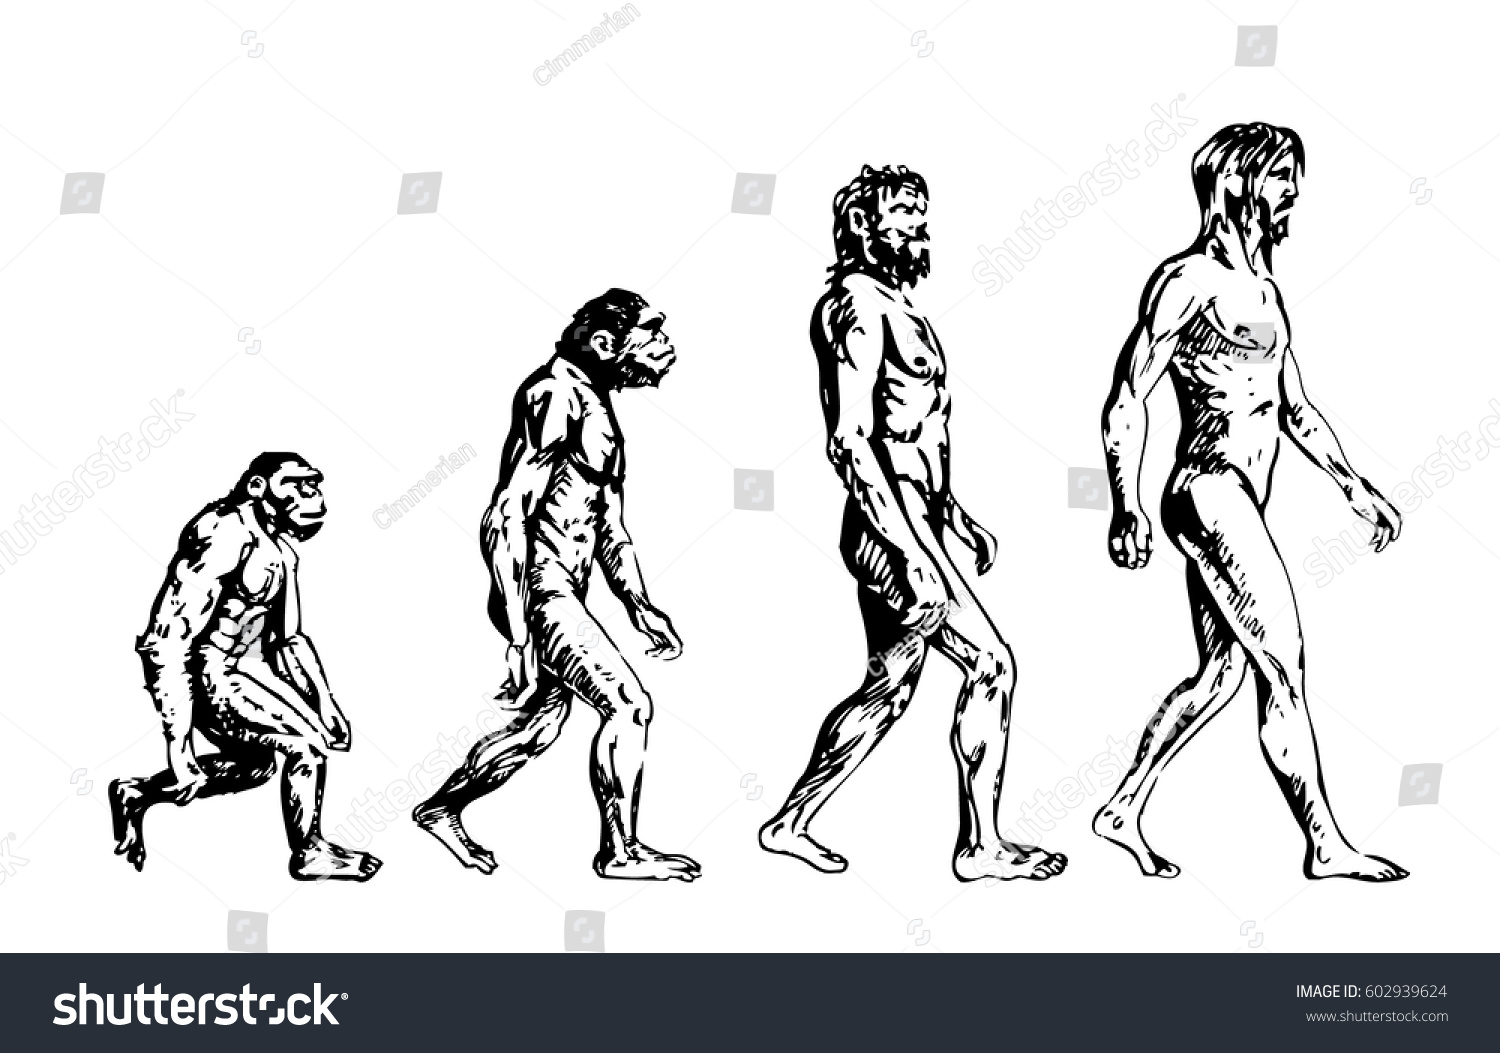 Human Evolution Hand Drawing Stock Vector 602939624 - Shutterstock